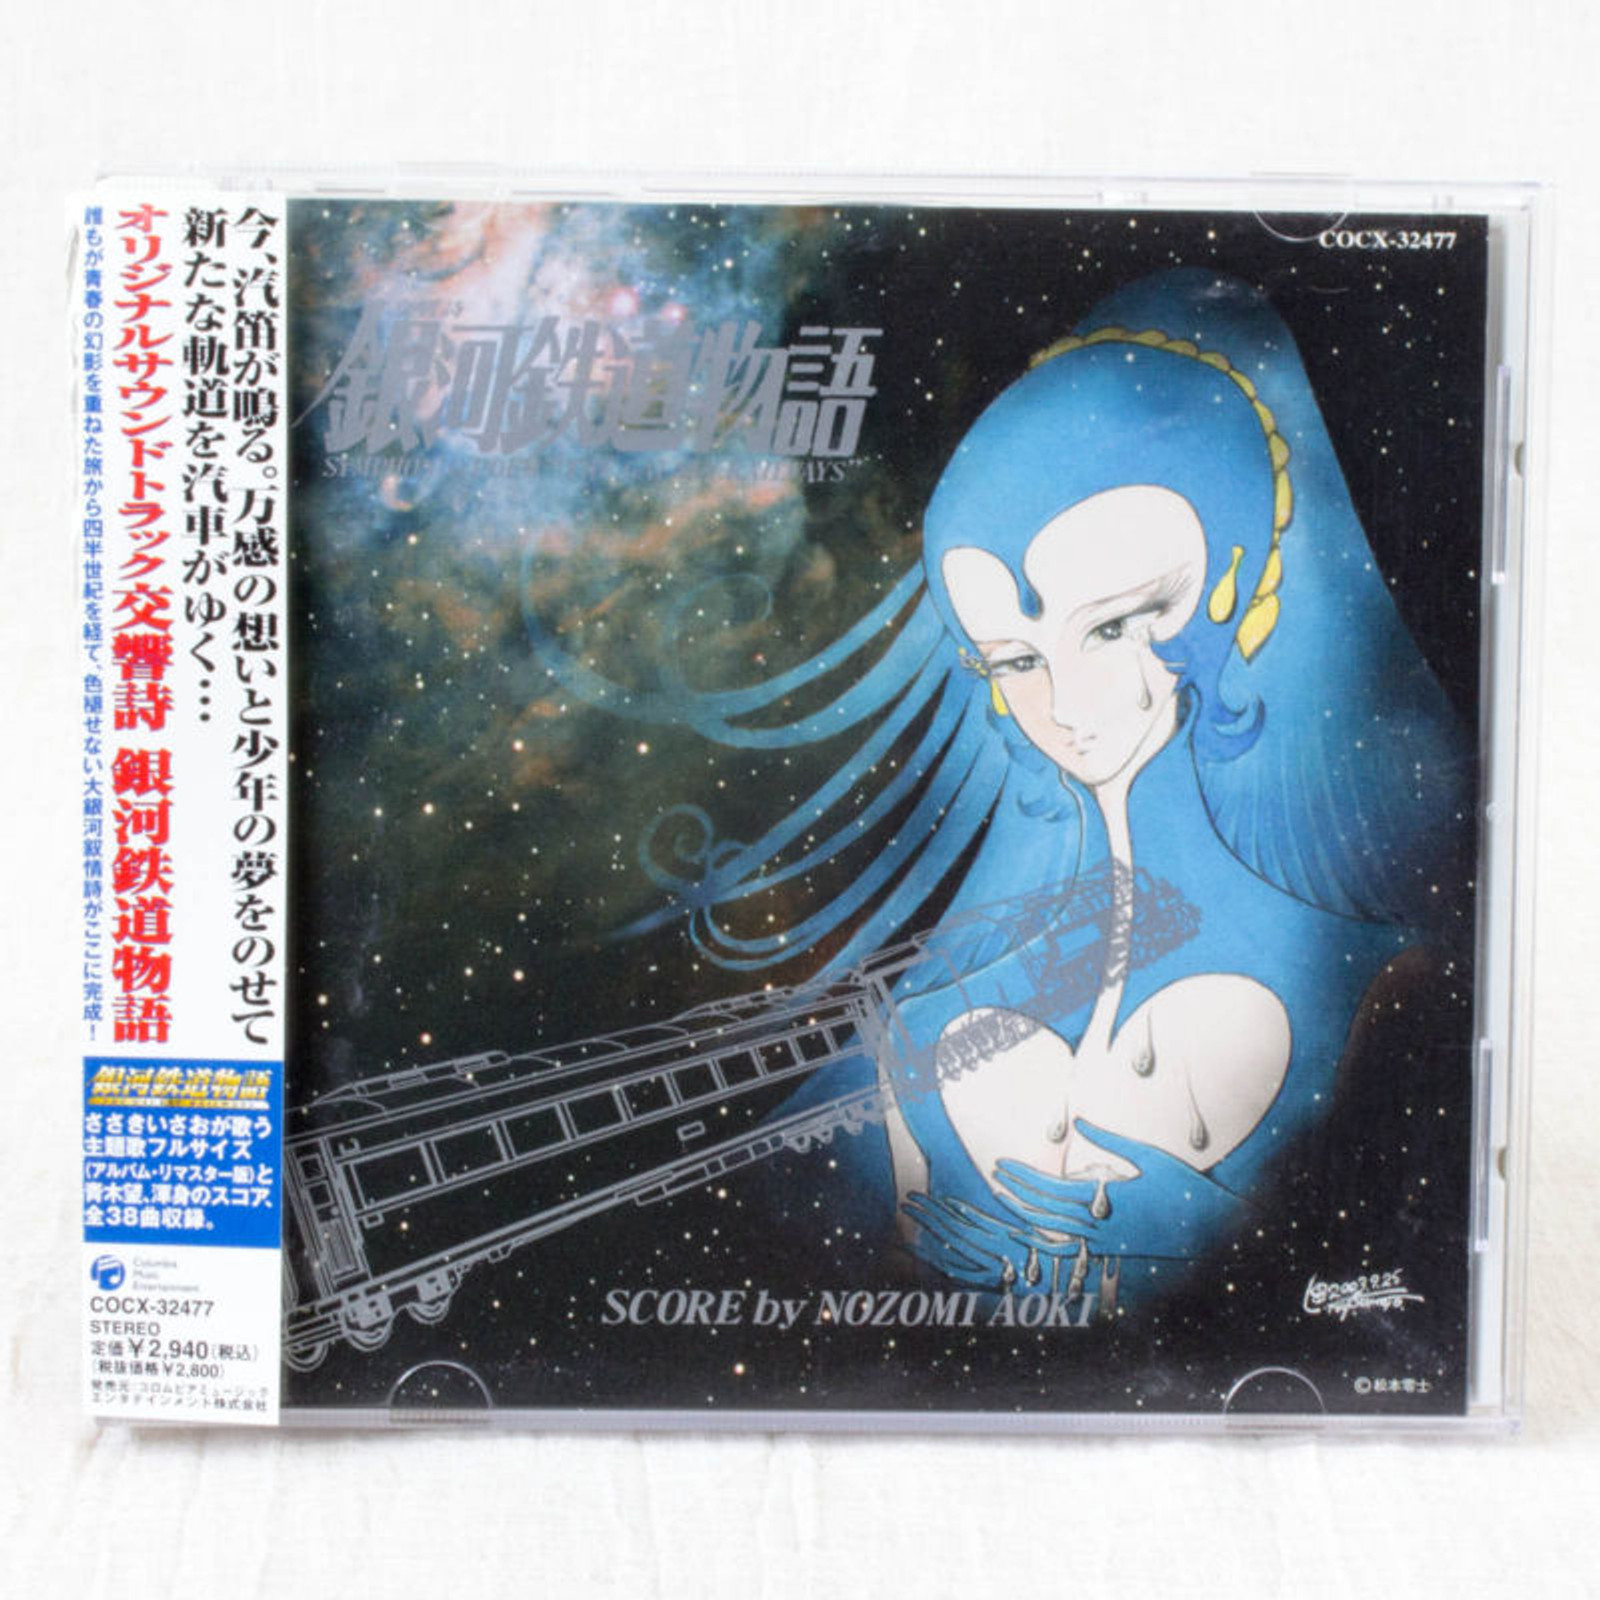 RARE!! Symphonic Poem The Galaxy Railways Soundtrack Japan CD ANIME NOZOMI AOKI